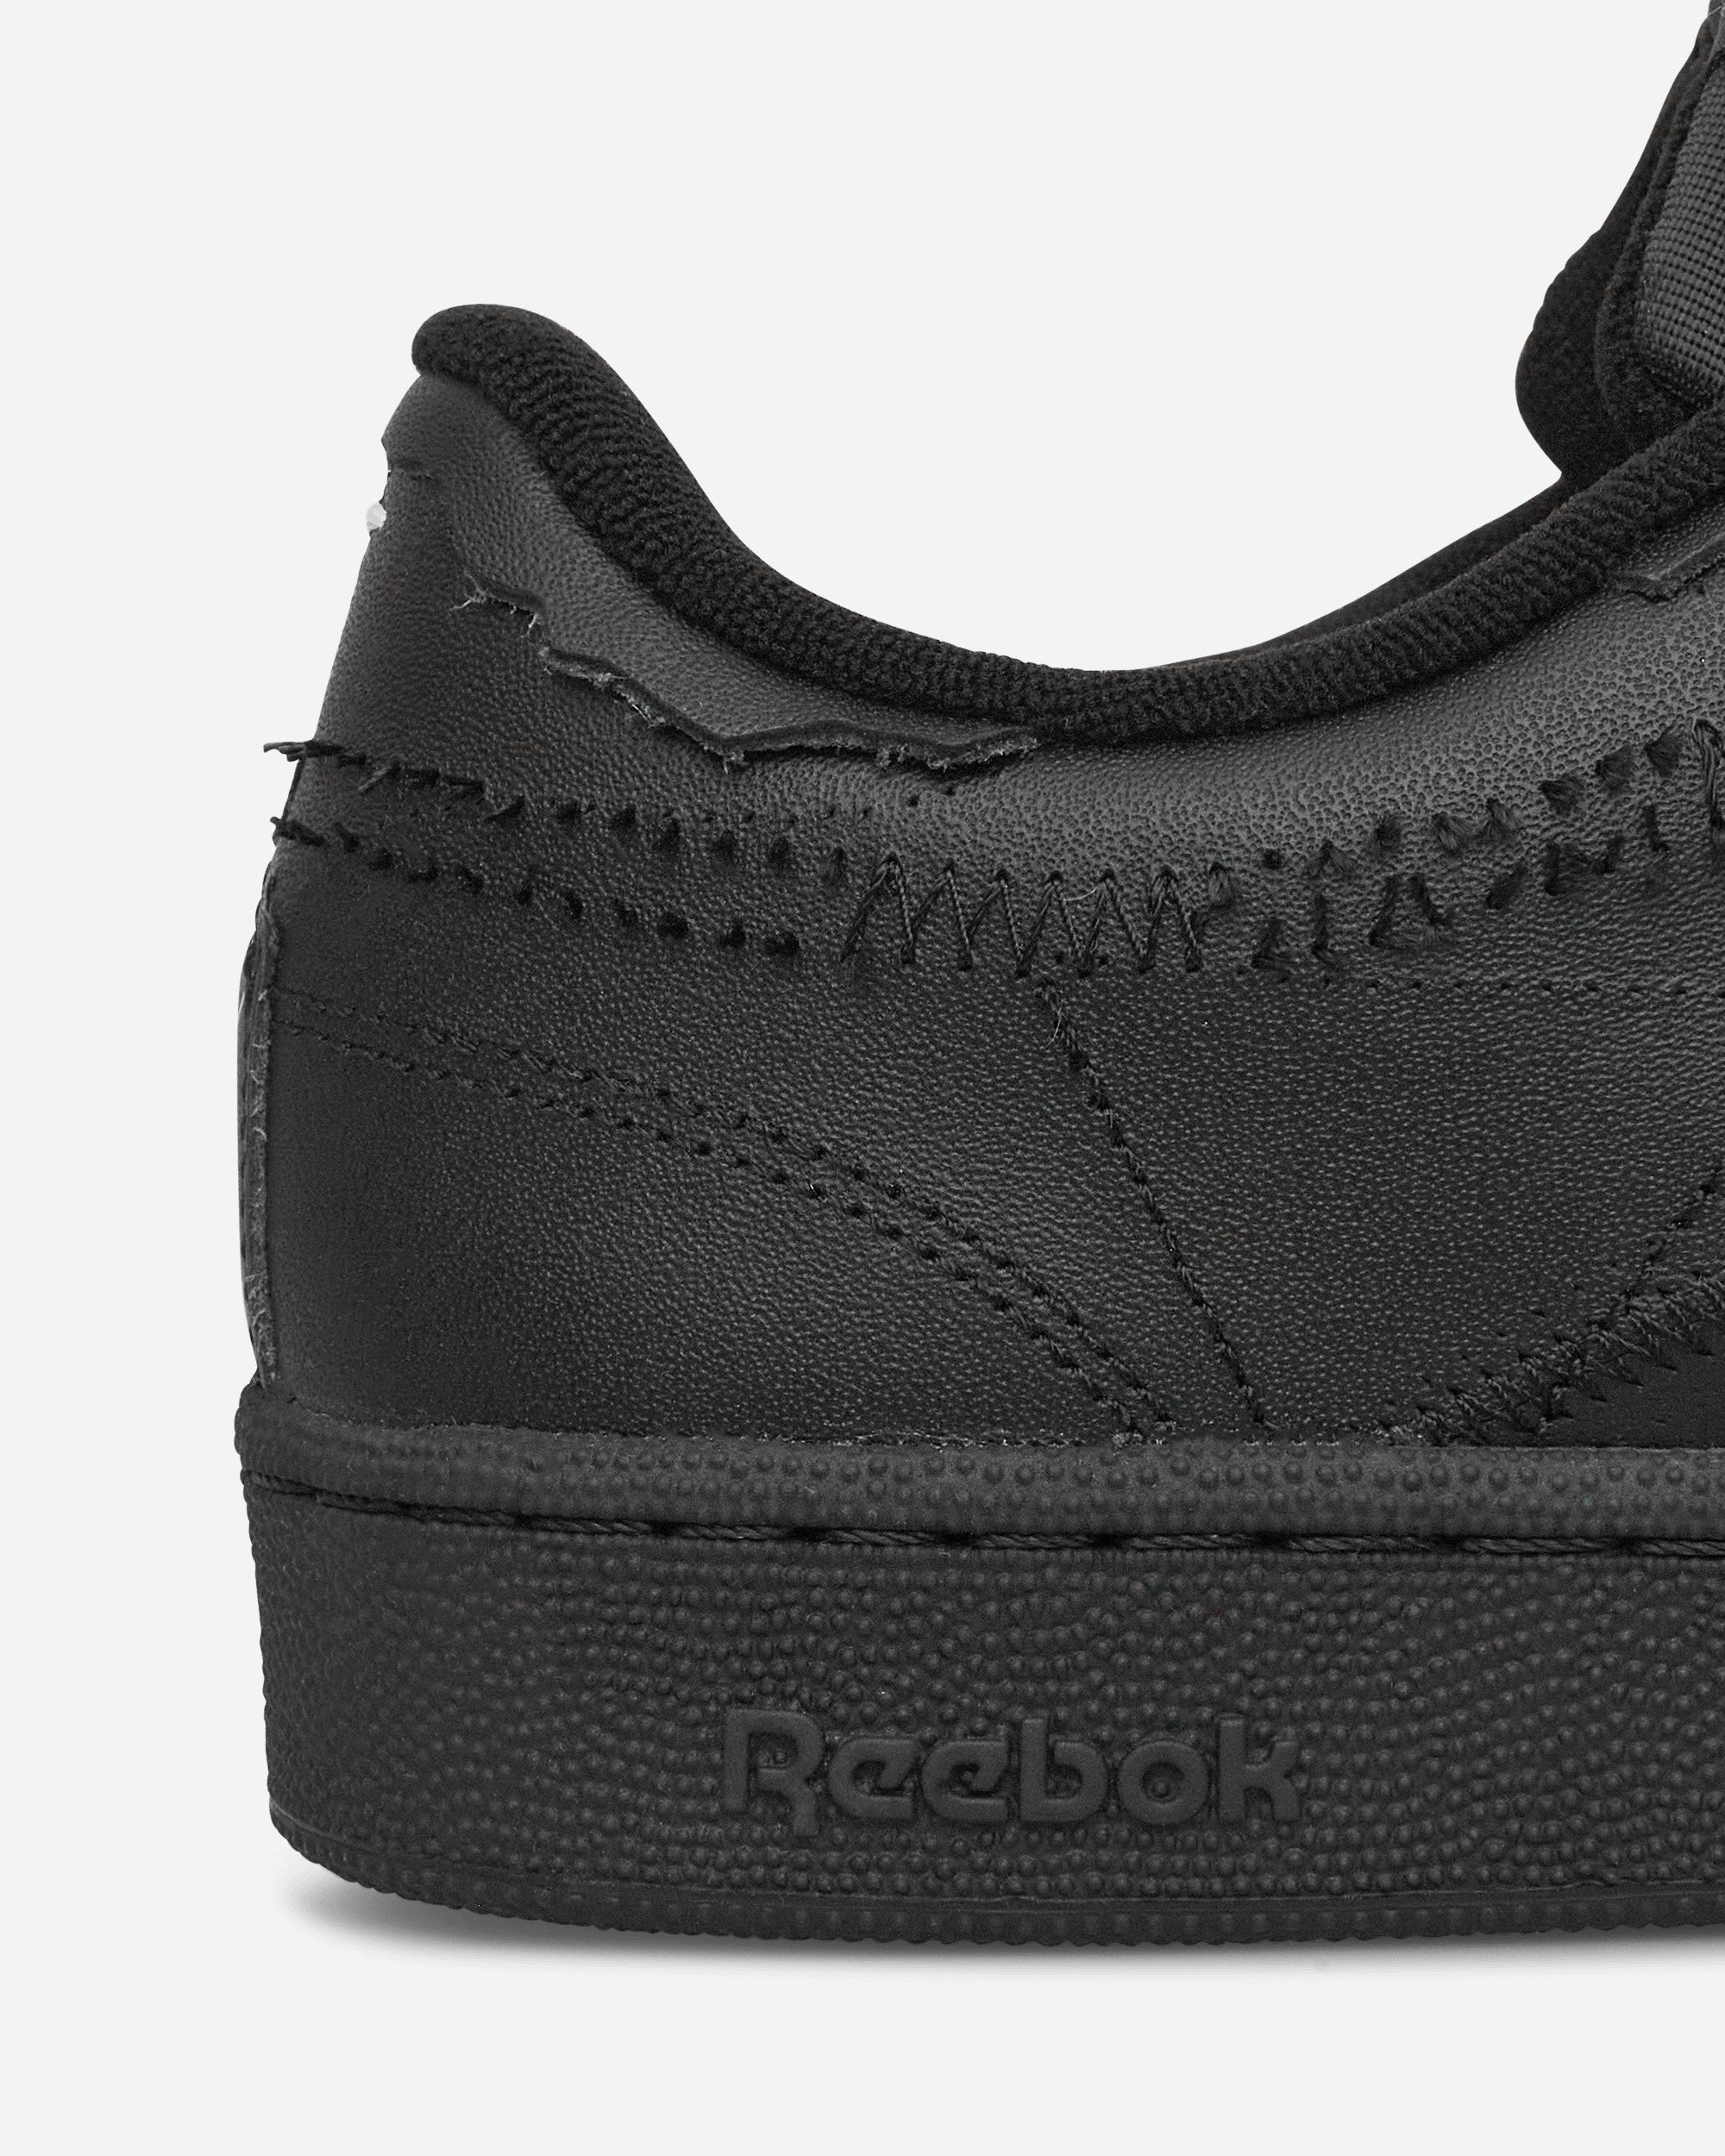 Reebok Project 0 Cc Mo Black Sneakers Low GW5012